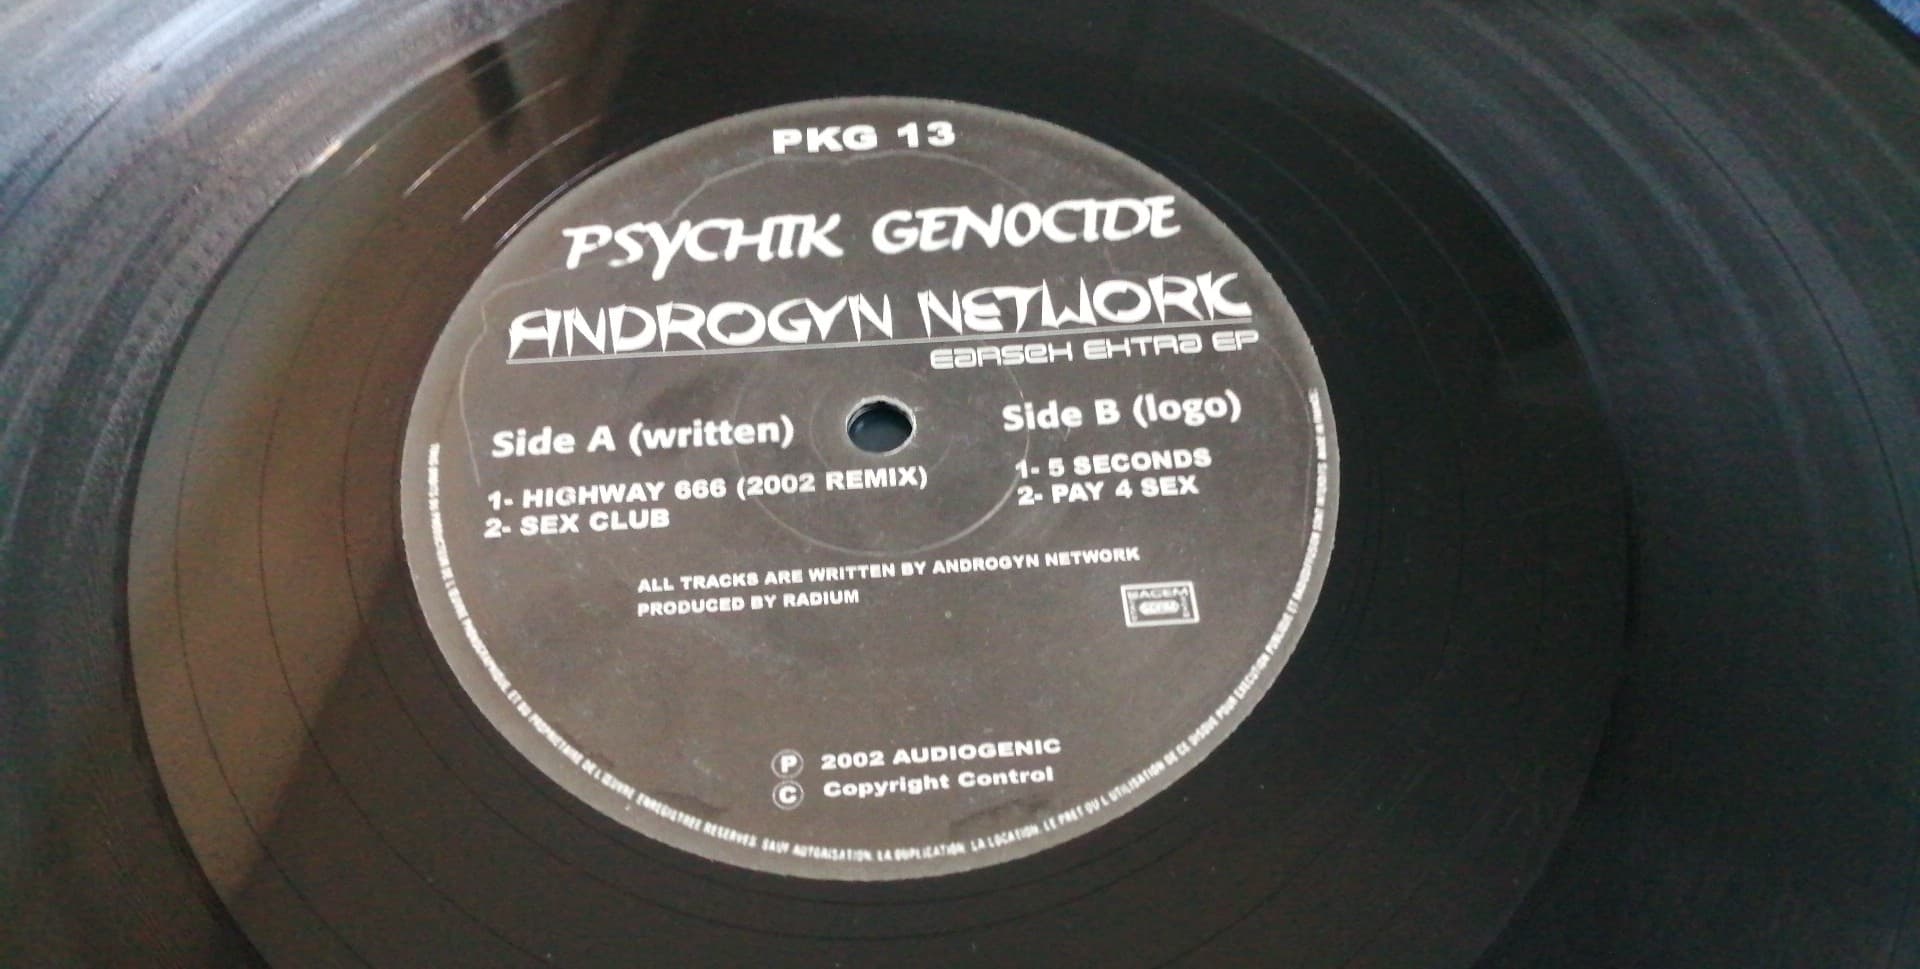 Psychik Genocide 13 - vinyle hardcore